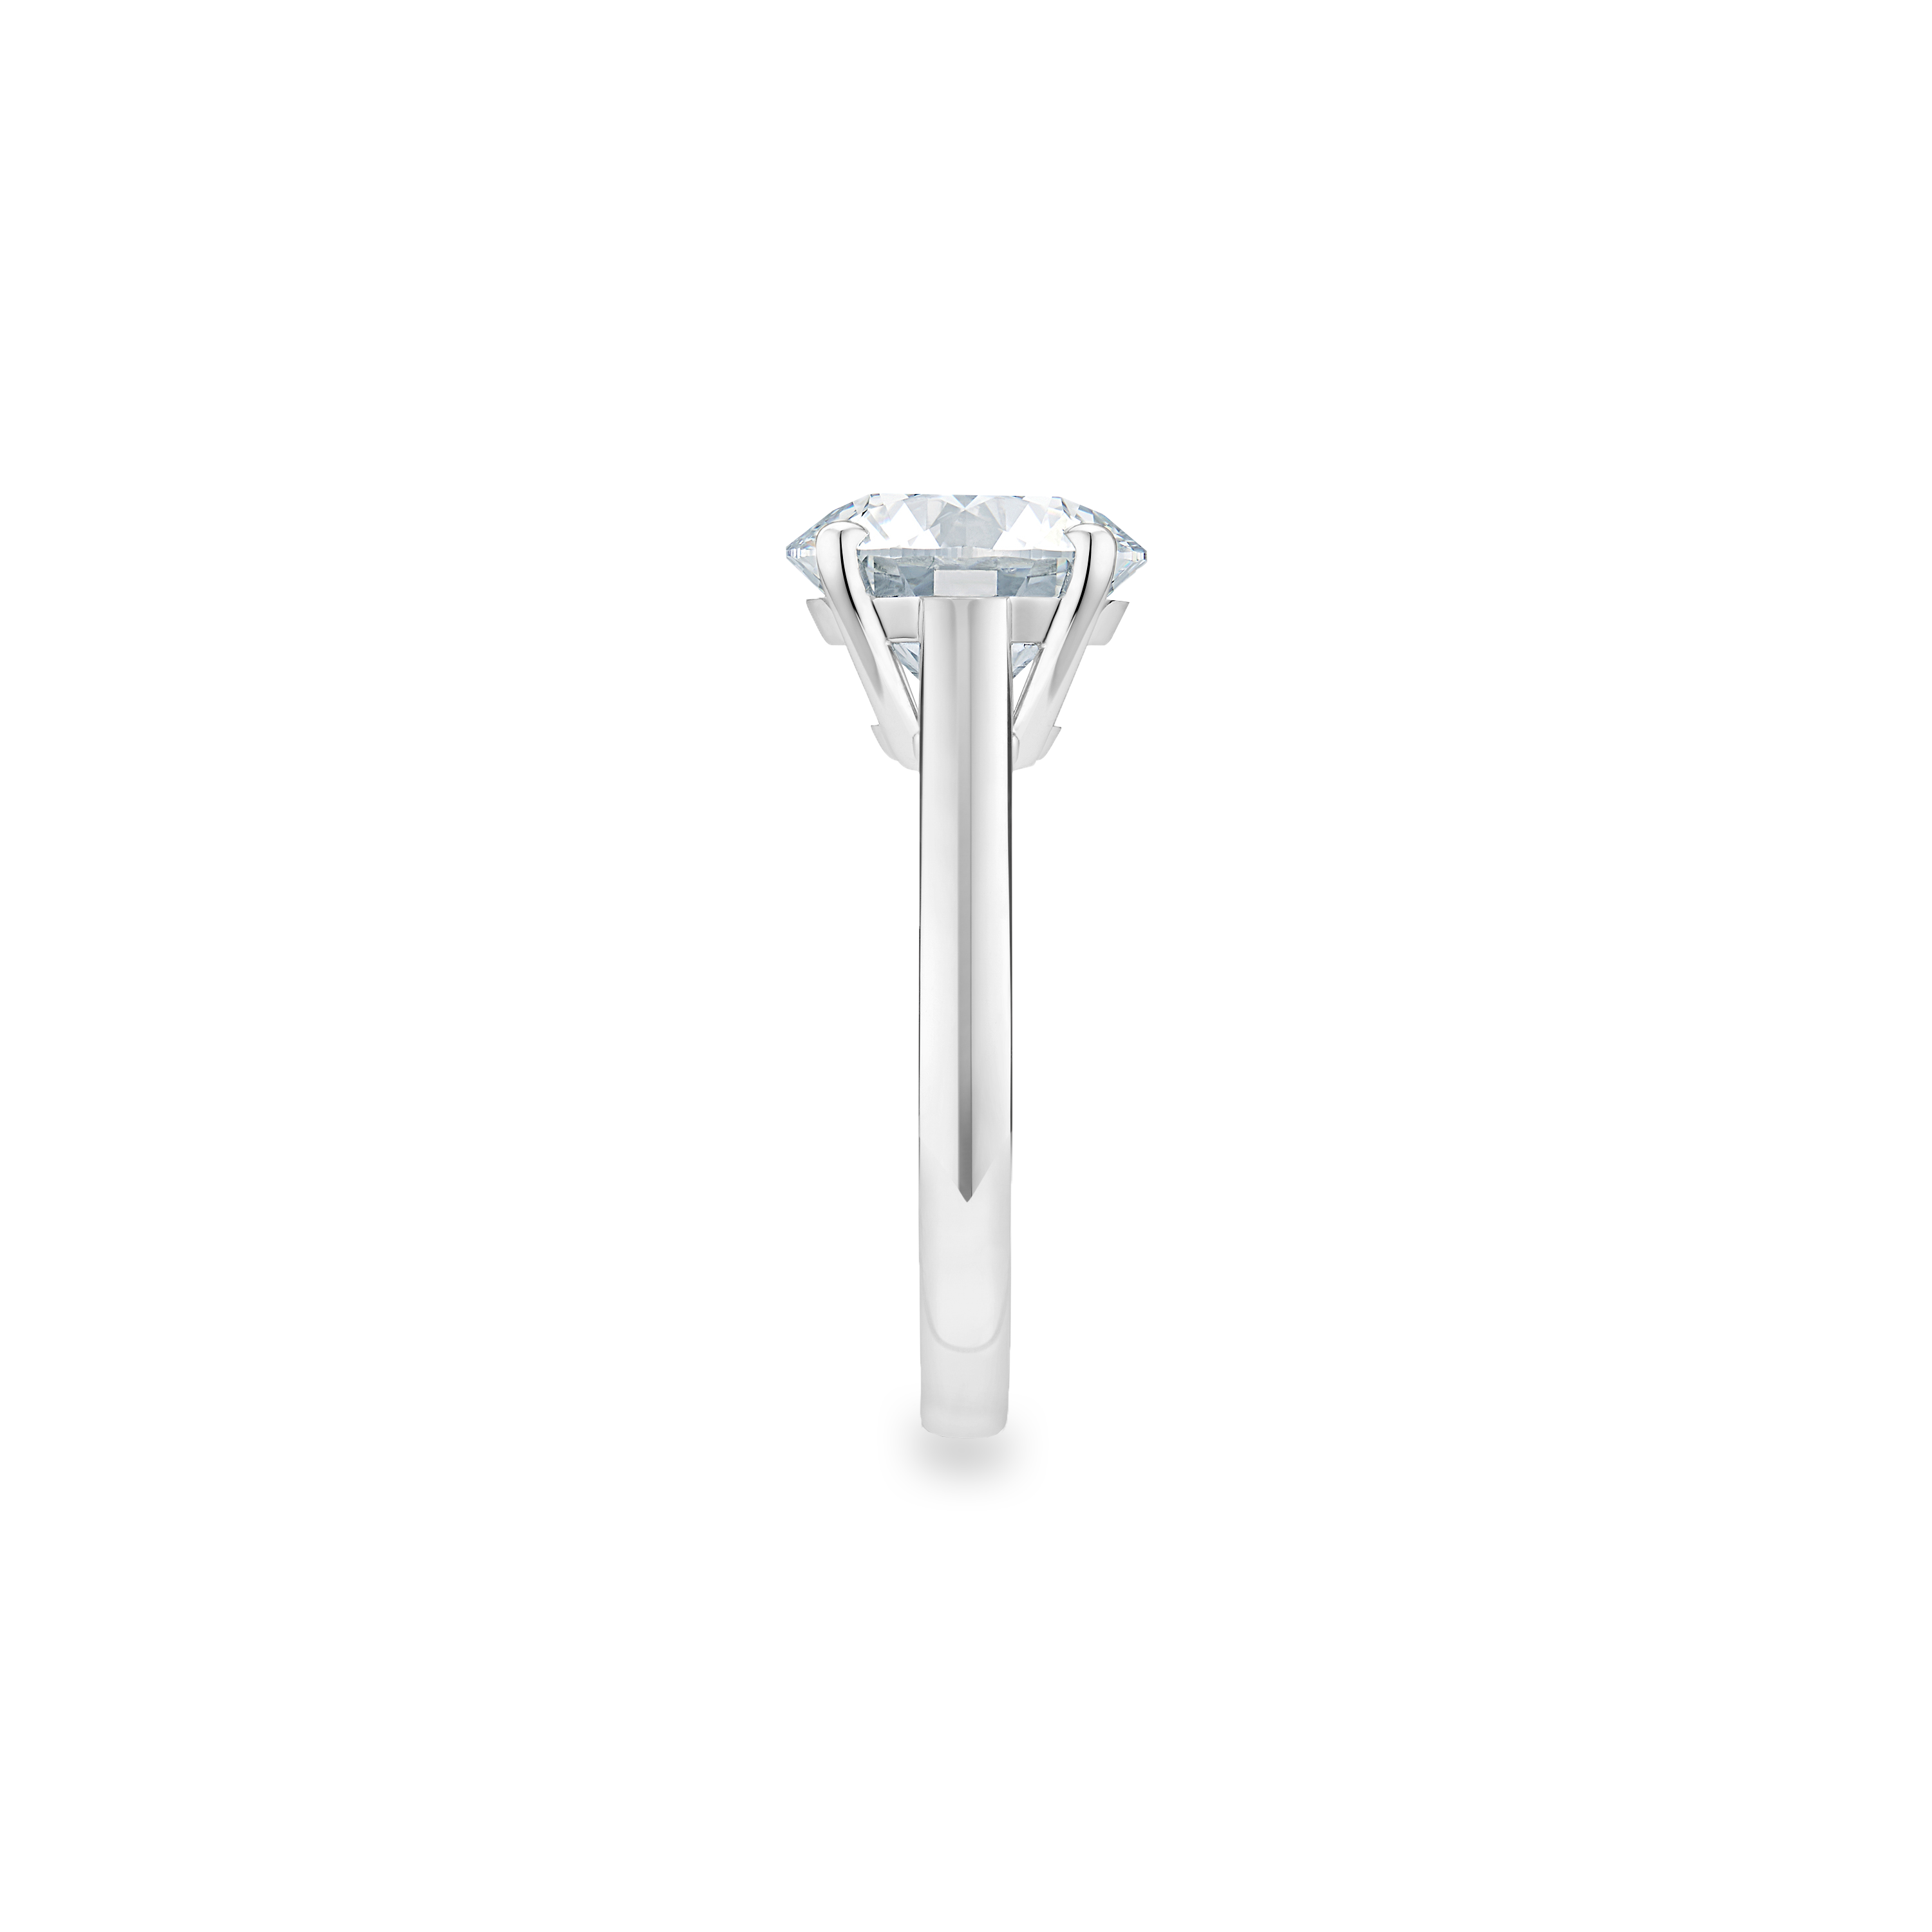 Solitaire DB Classic diamant taille brillant, image 3